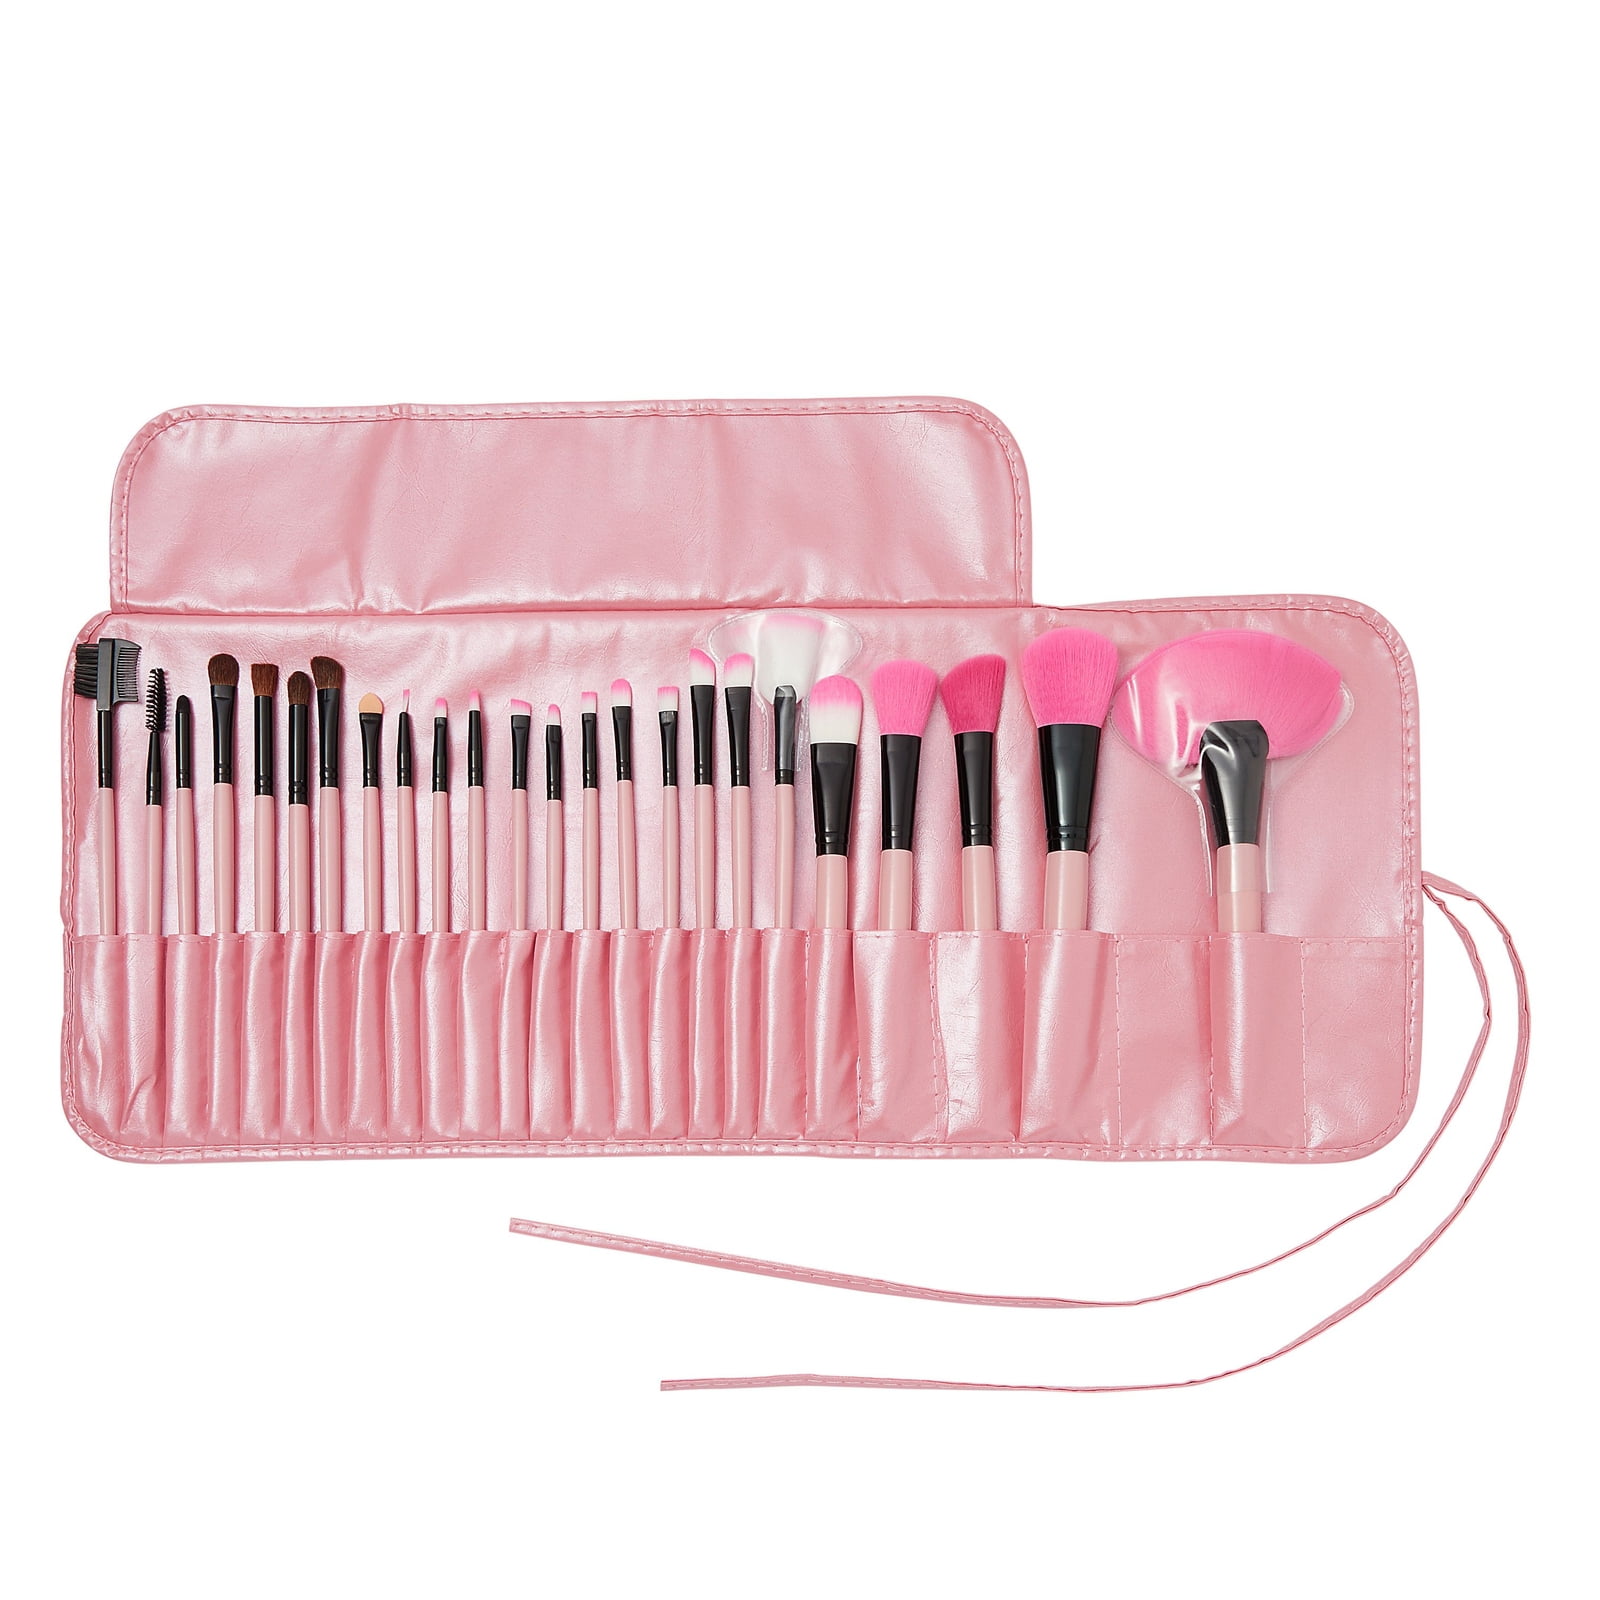 72 Grid Makeup & Painting Brush Holders Organizer for Pencil, Paintbrush,  Cosmetic Brushes, Pink 12 Pcs Crystal Handle Makeup Large Brush 